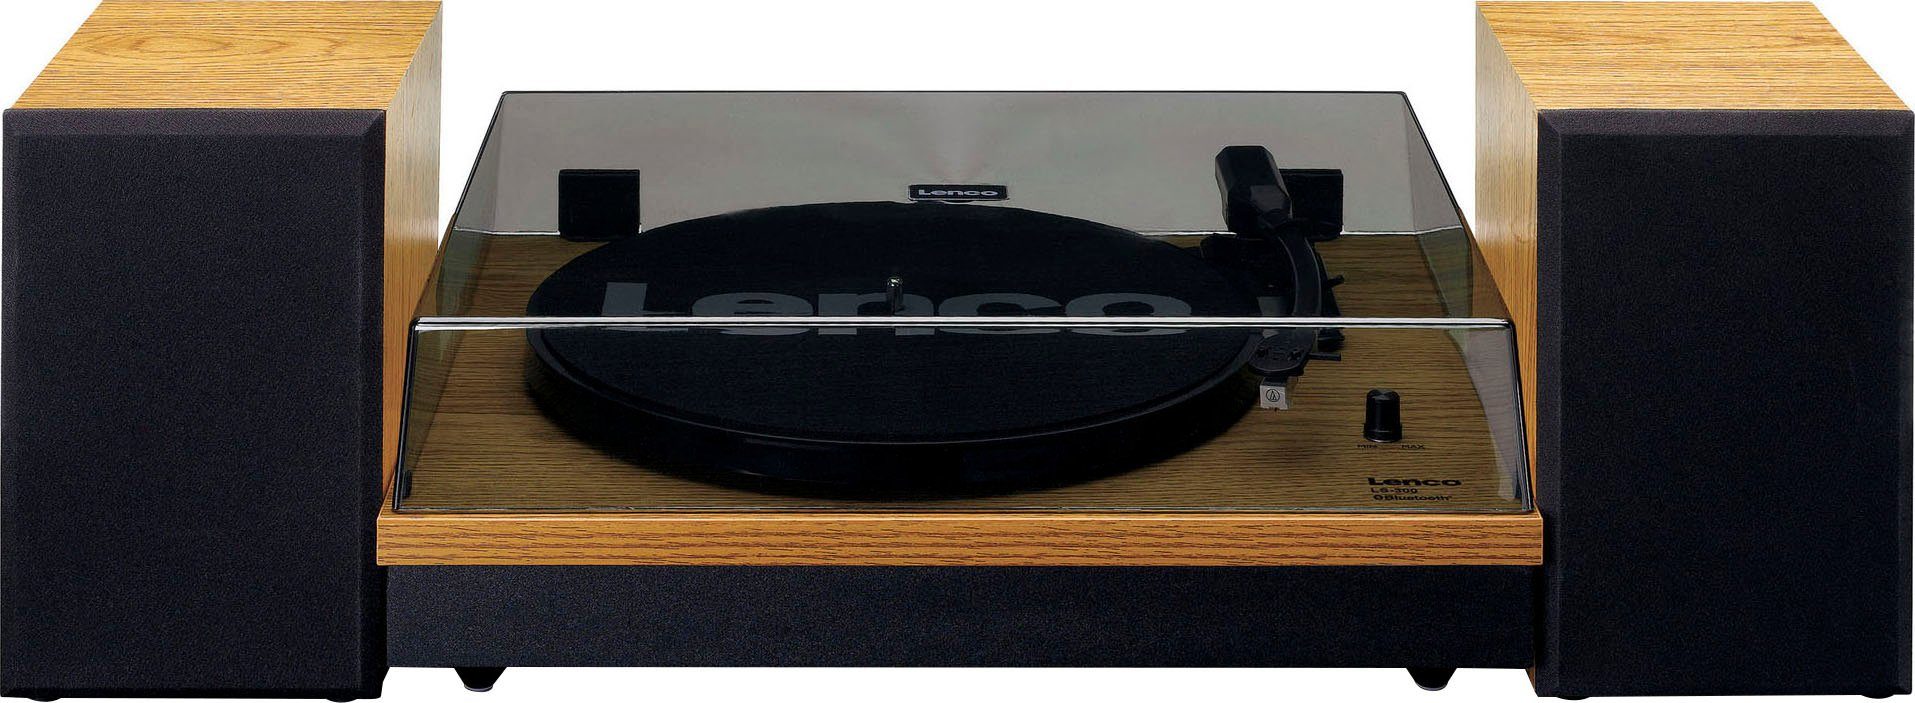 Lenco LS-300WD Plattenspieler Plattenspieler (Riemenantrieb) Lautsprechern mit Holz ext